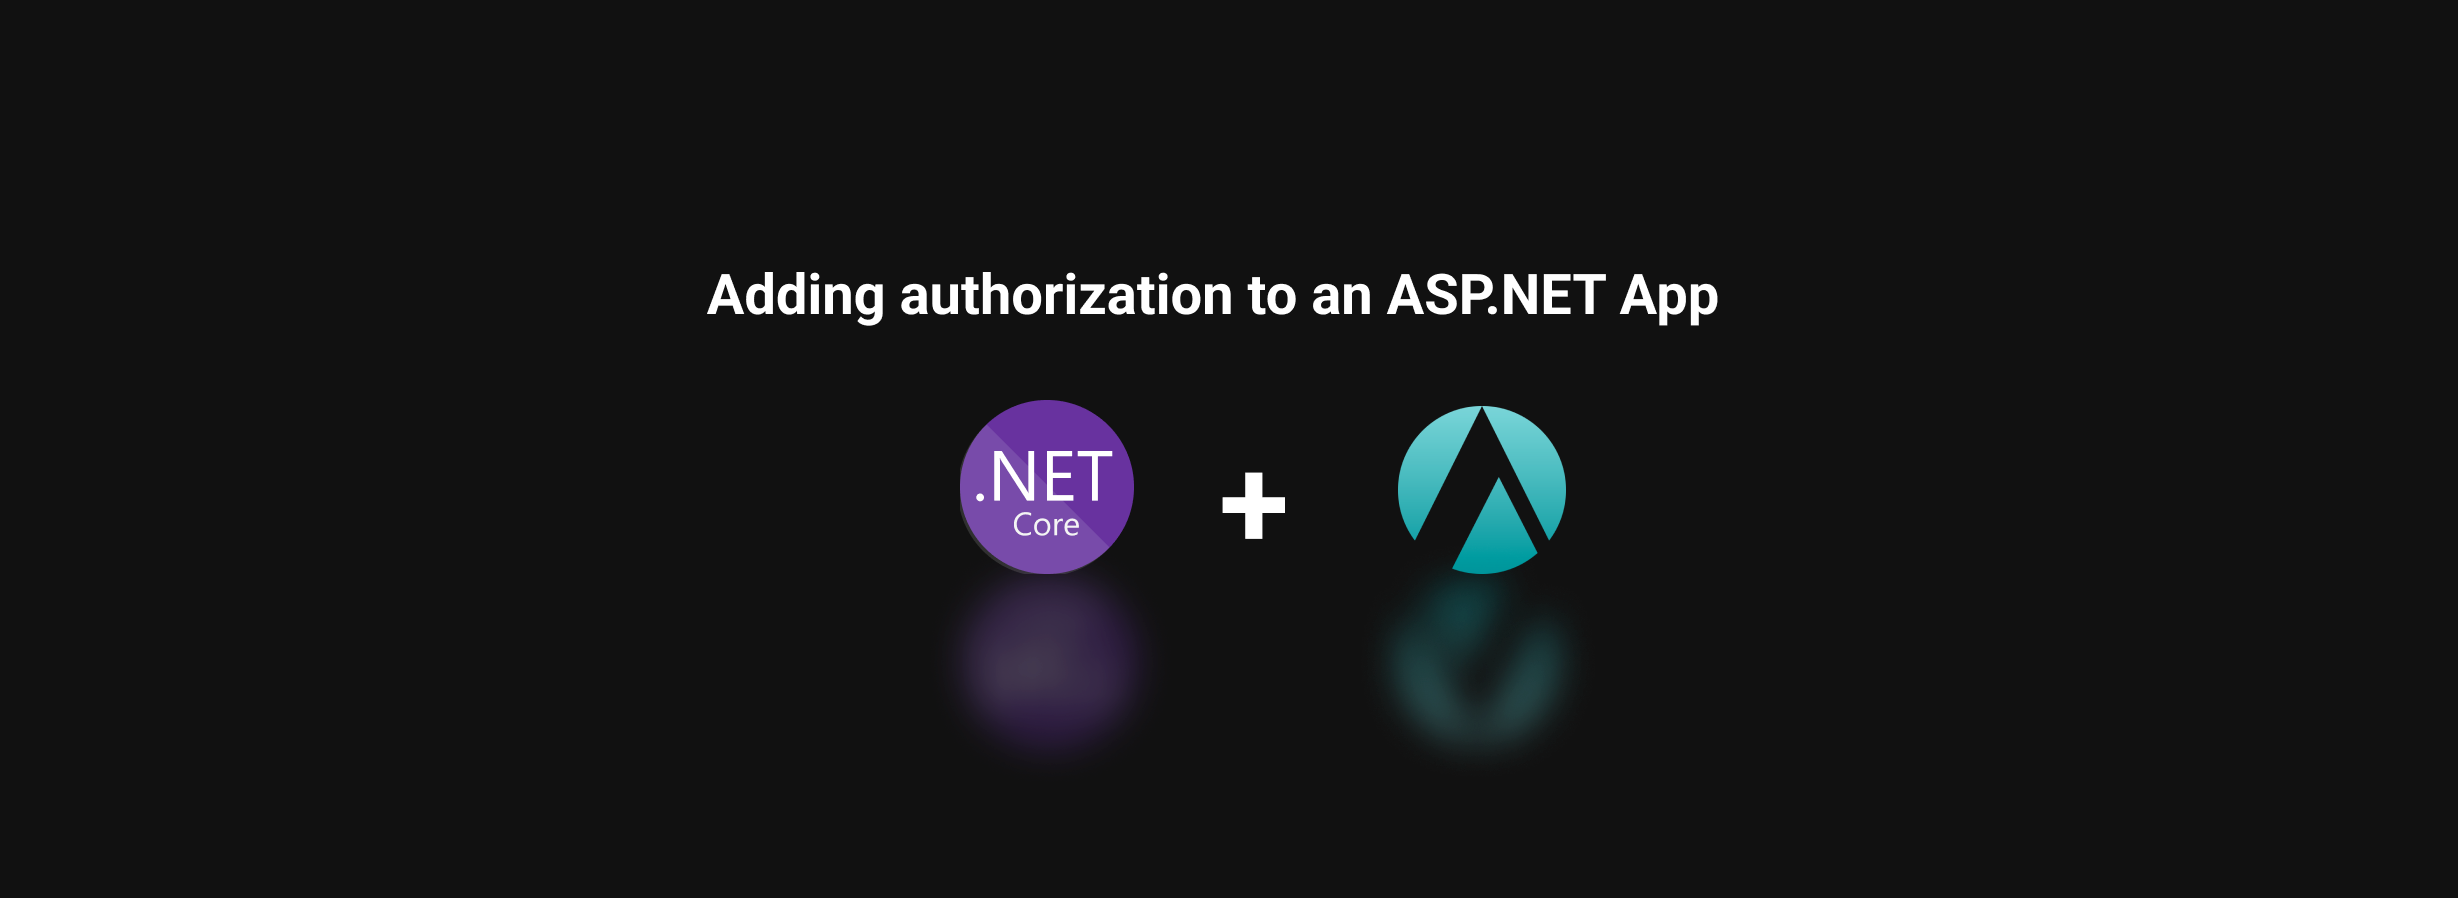 Adding authorization to an ASP.NET app